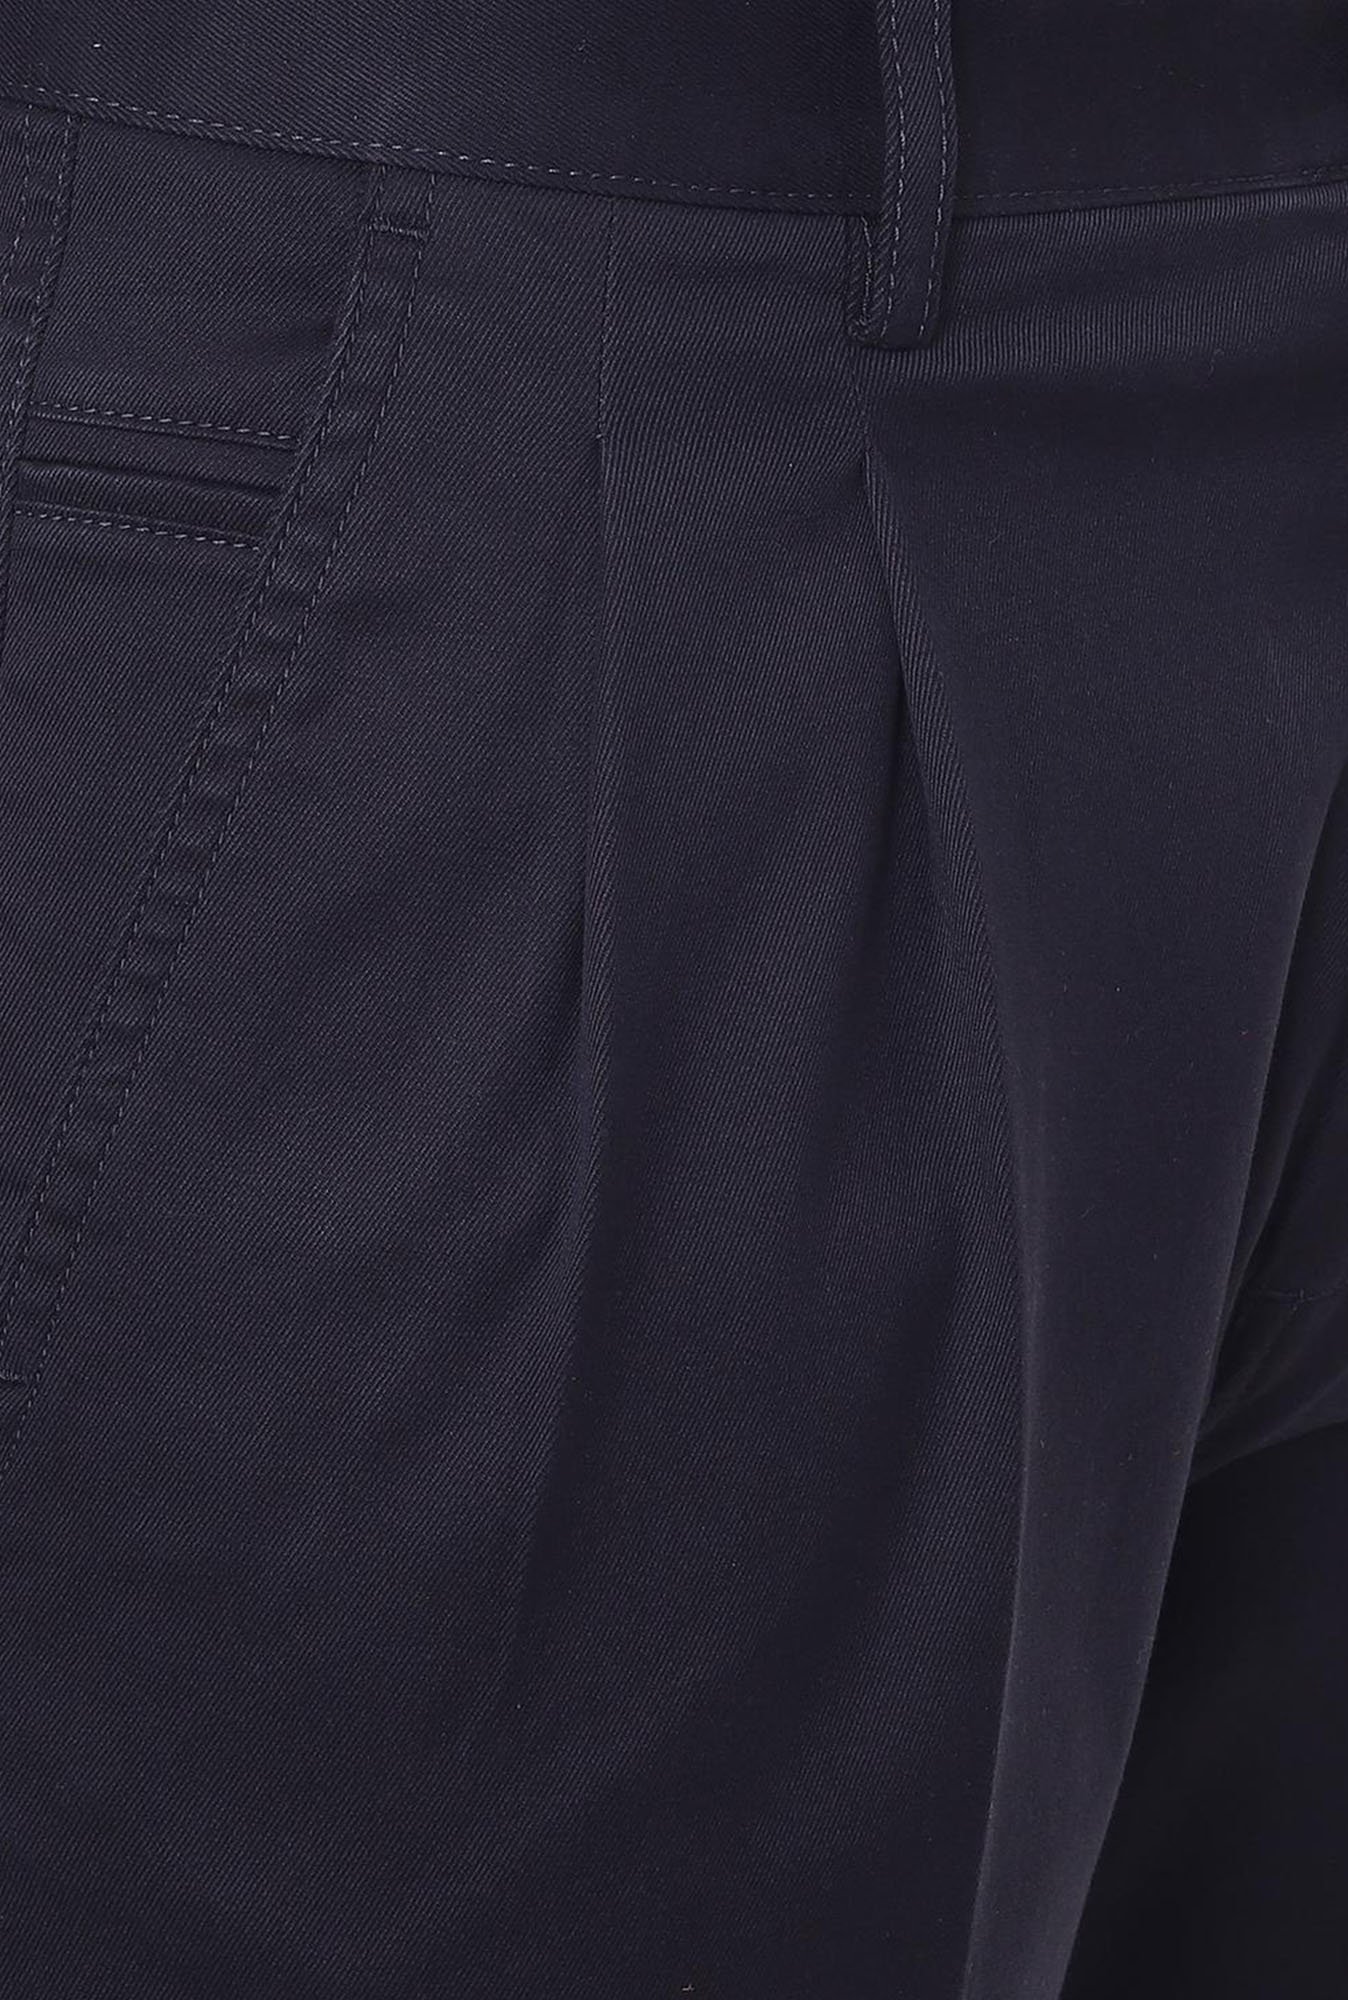 Buy Men Black Regular Fit Solid Formal Trousers Online - 23336 | Allen Solly